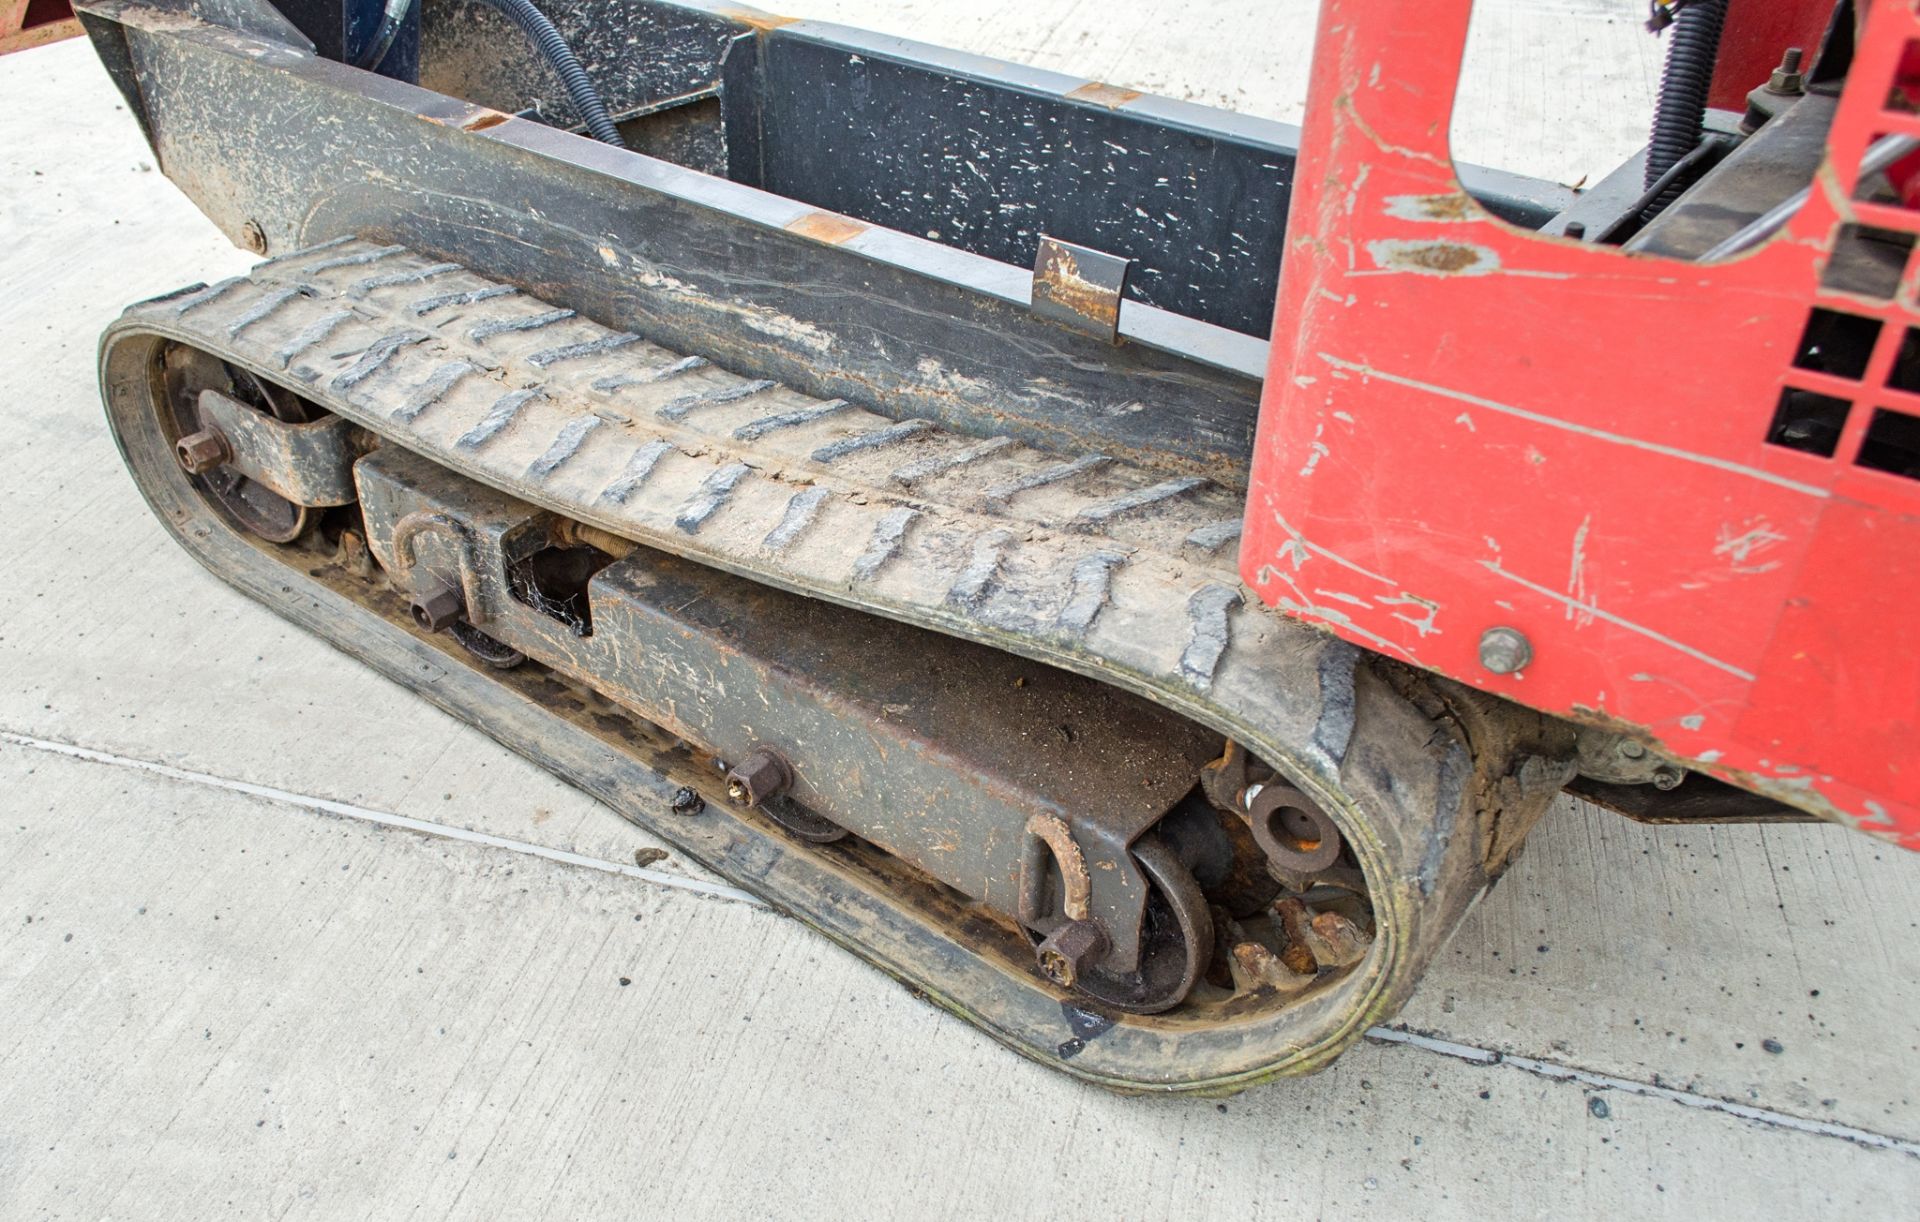 Trackbarrow WB04 400 kg rubber tracked walk behind dumper Year: 2014 S/N: 141226 - Image 11 of 14